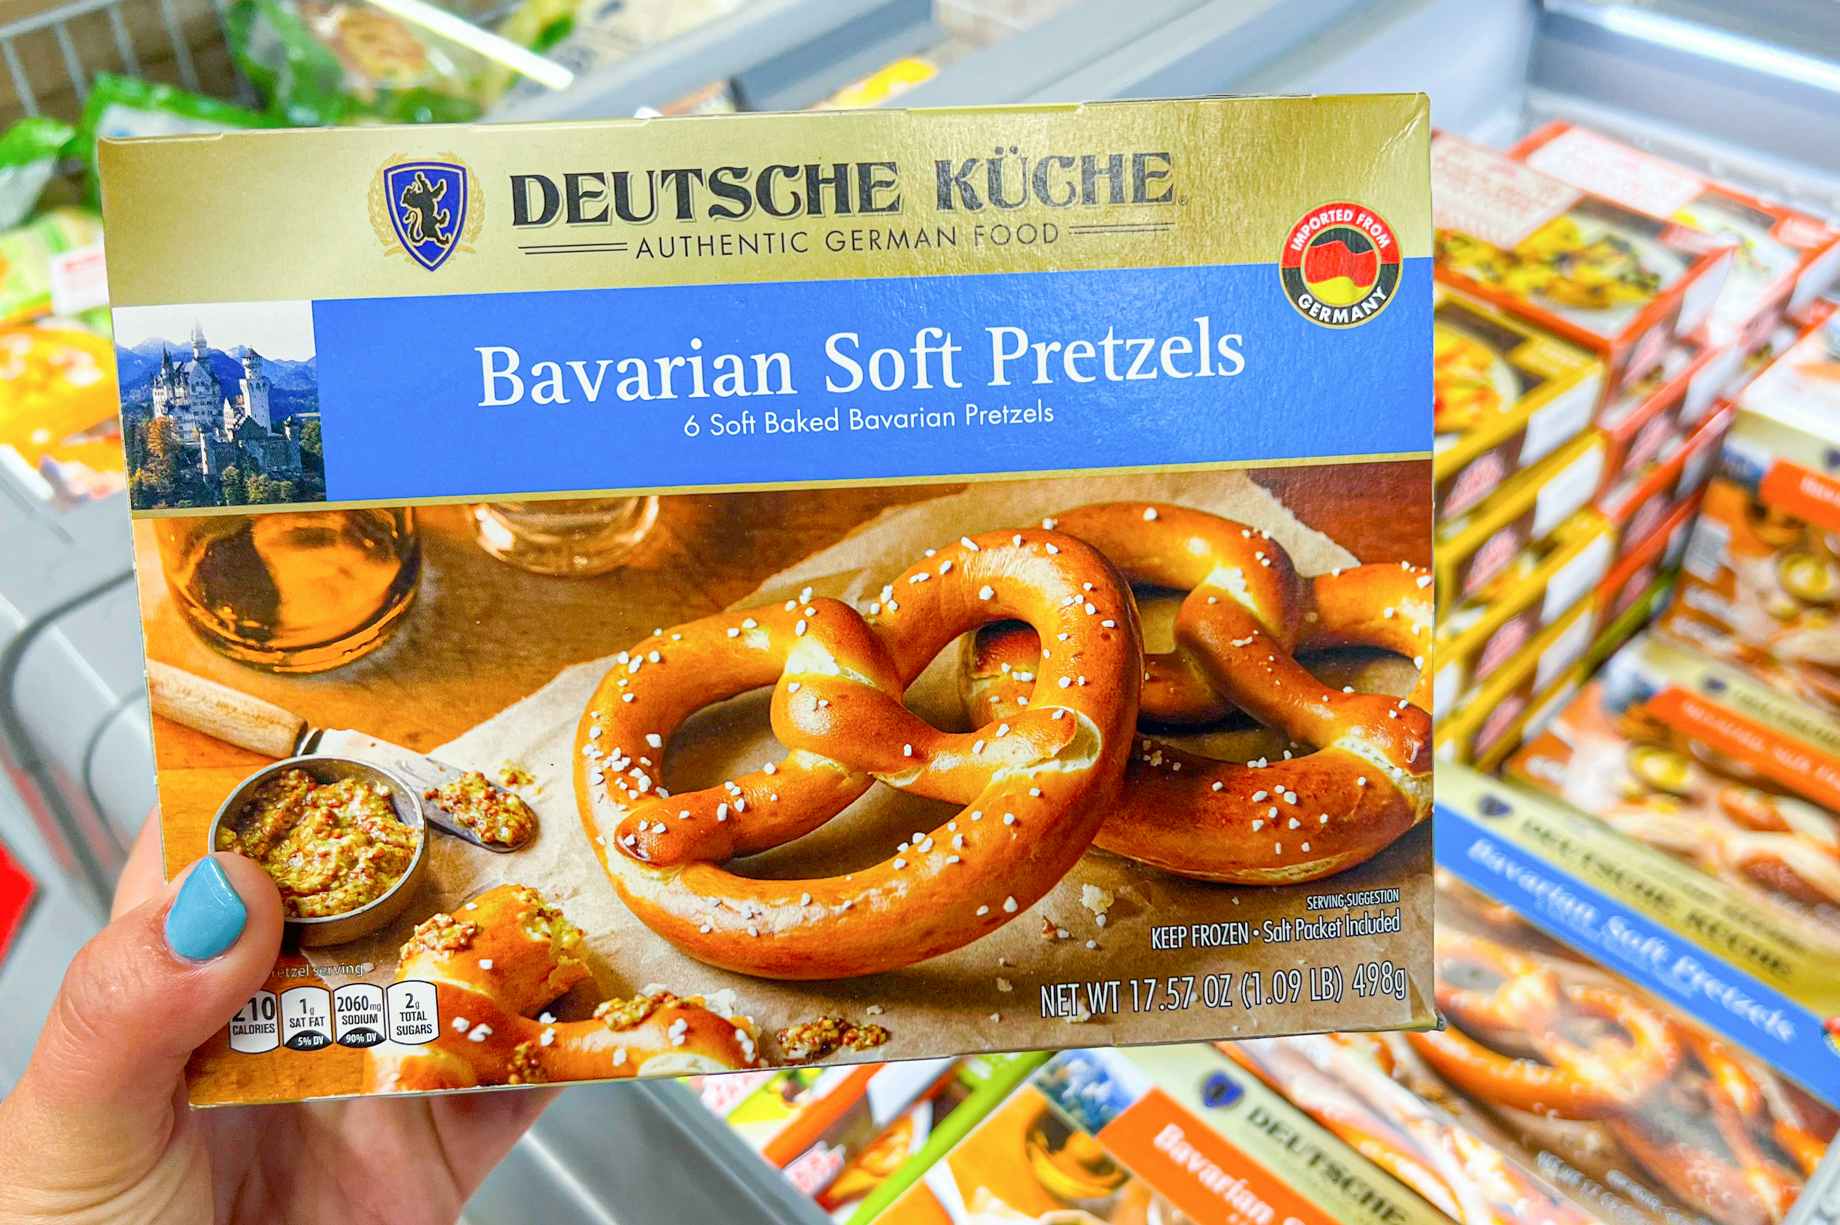 Someone holding a box of Bavarian soft pretzels at Aldi